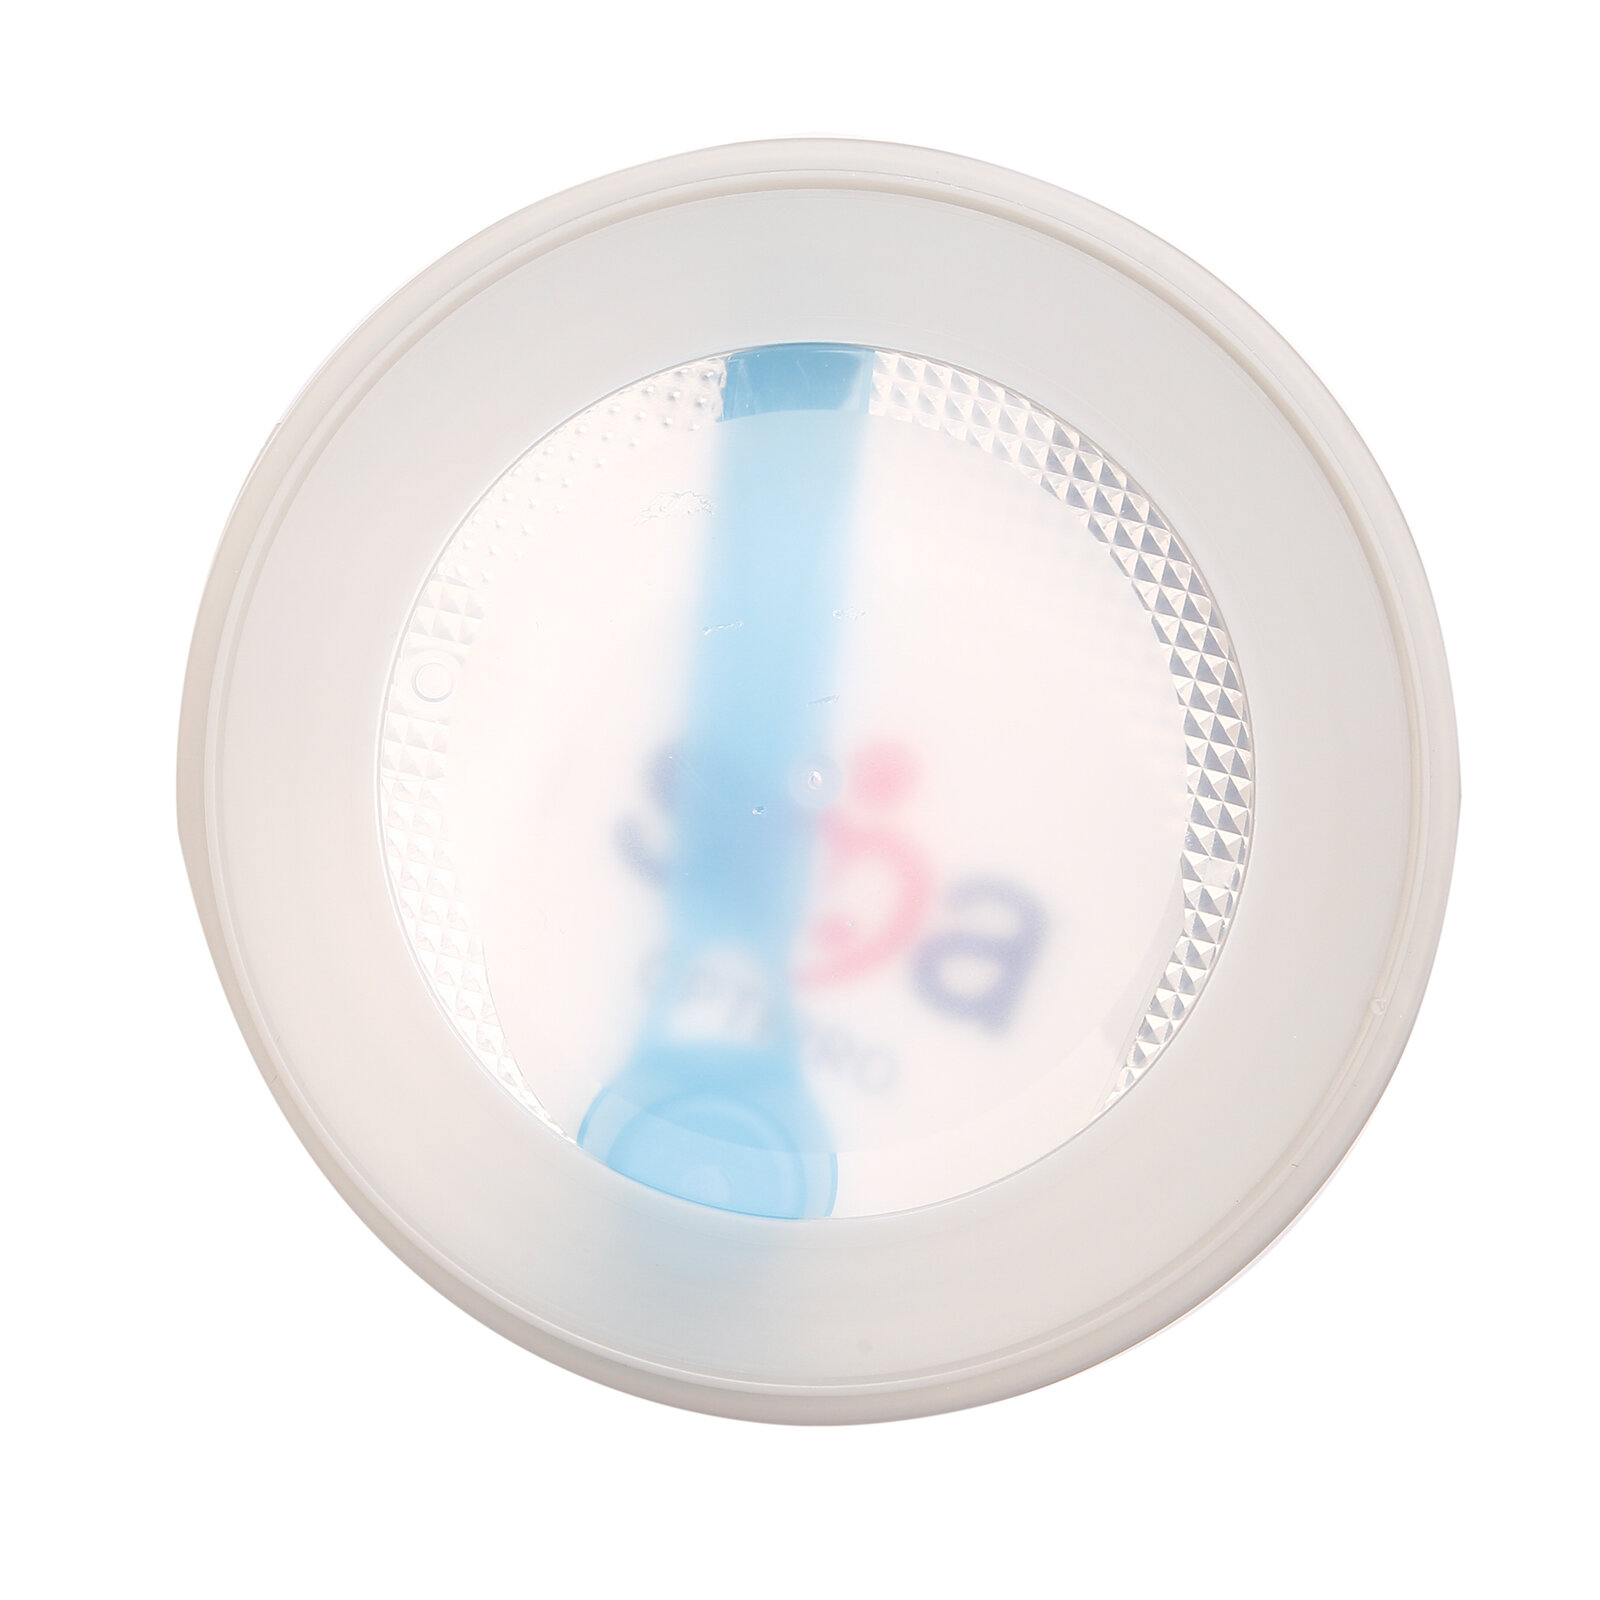 Optipro Probiyotik 1 Bebek Sütü 800 gr 0-6 Ay